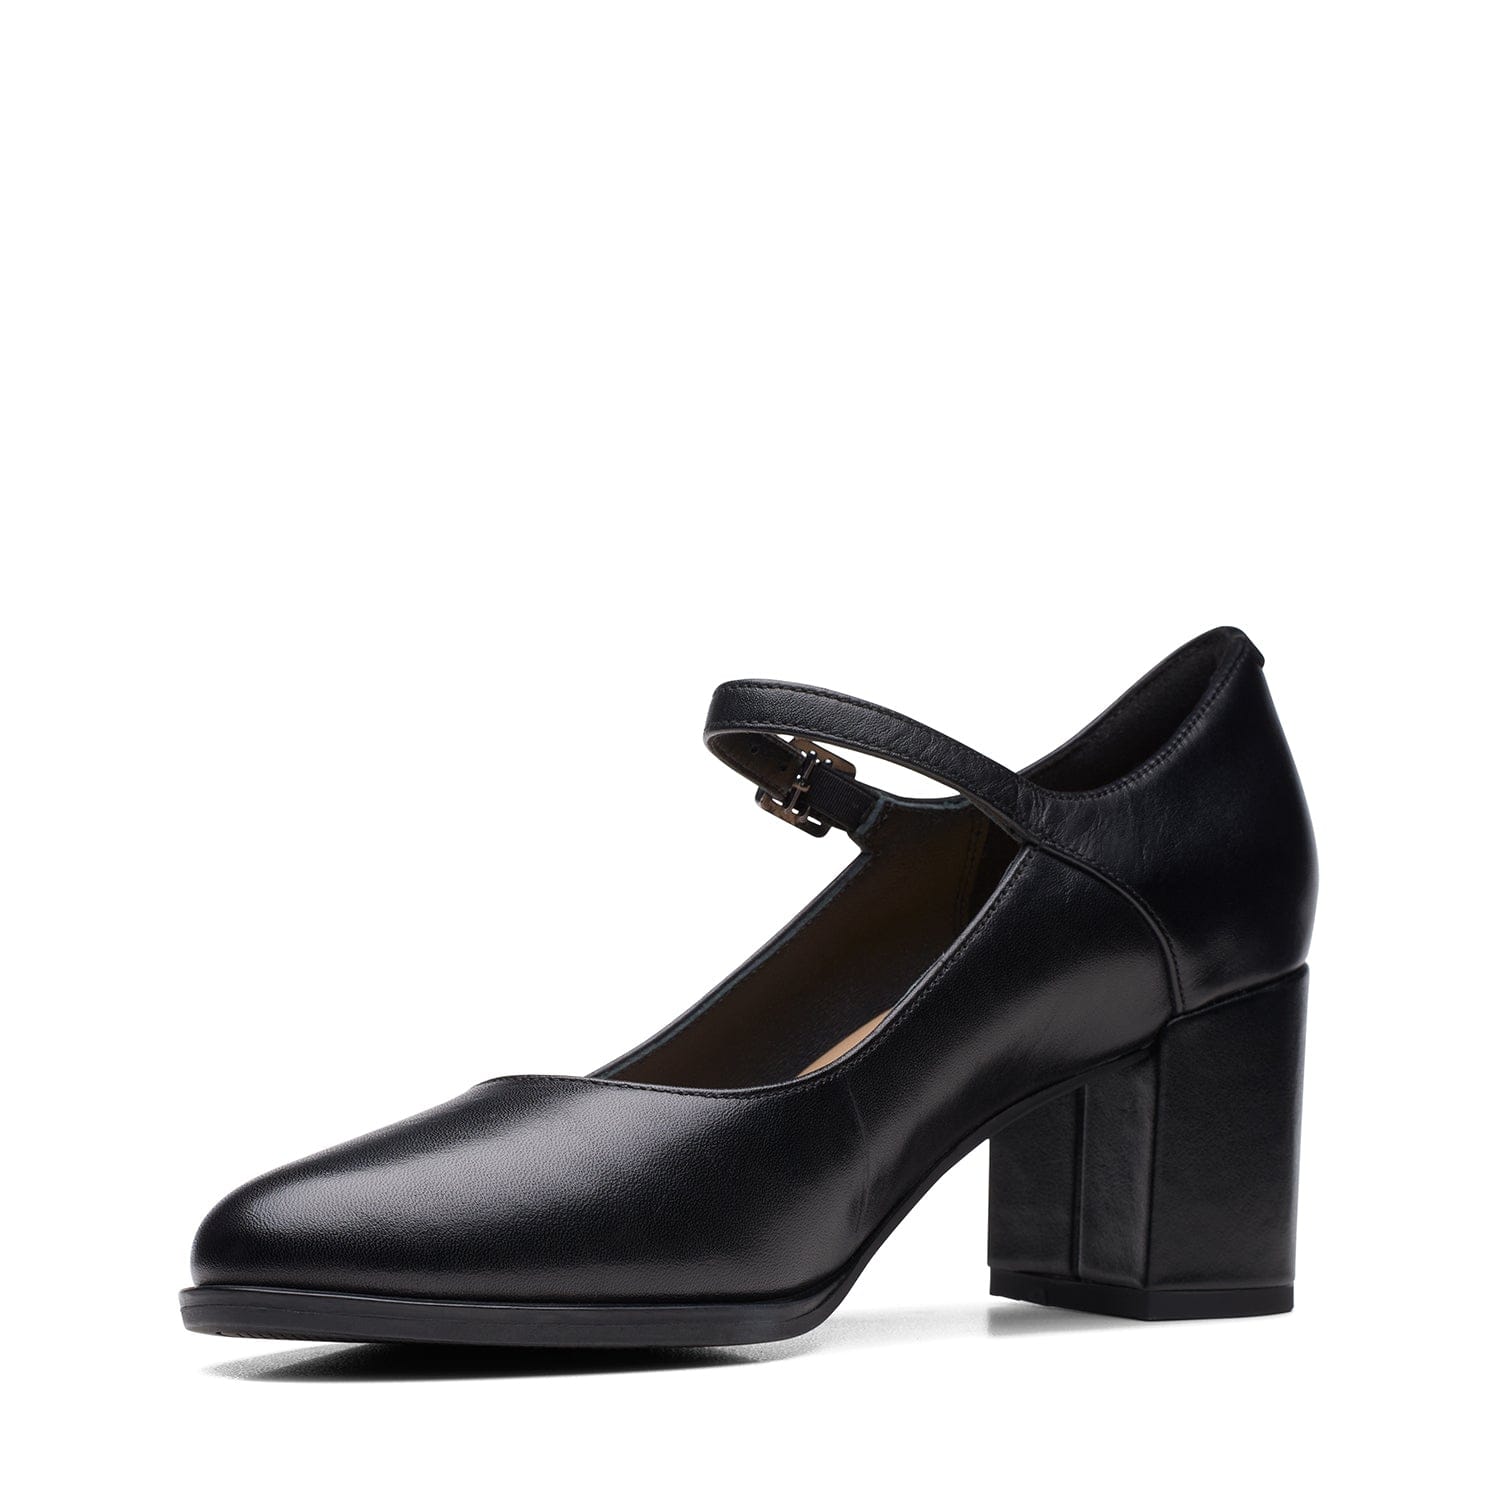 Clarks Freva55 Strap - Shoes - Black Leather - 261720525 - E Width (Wide Fit)